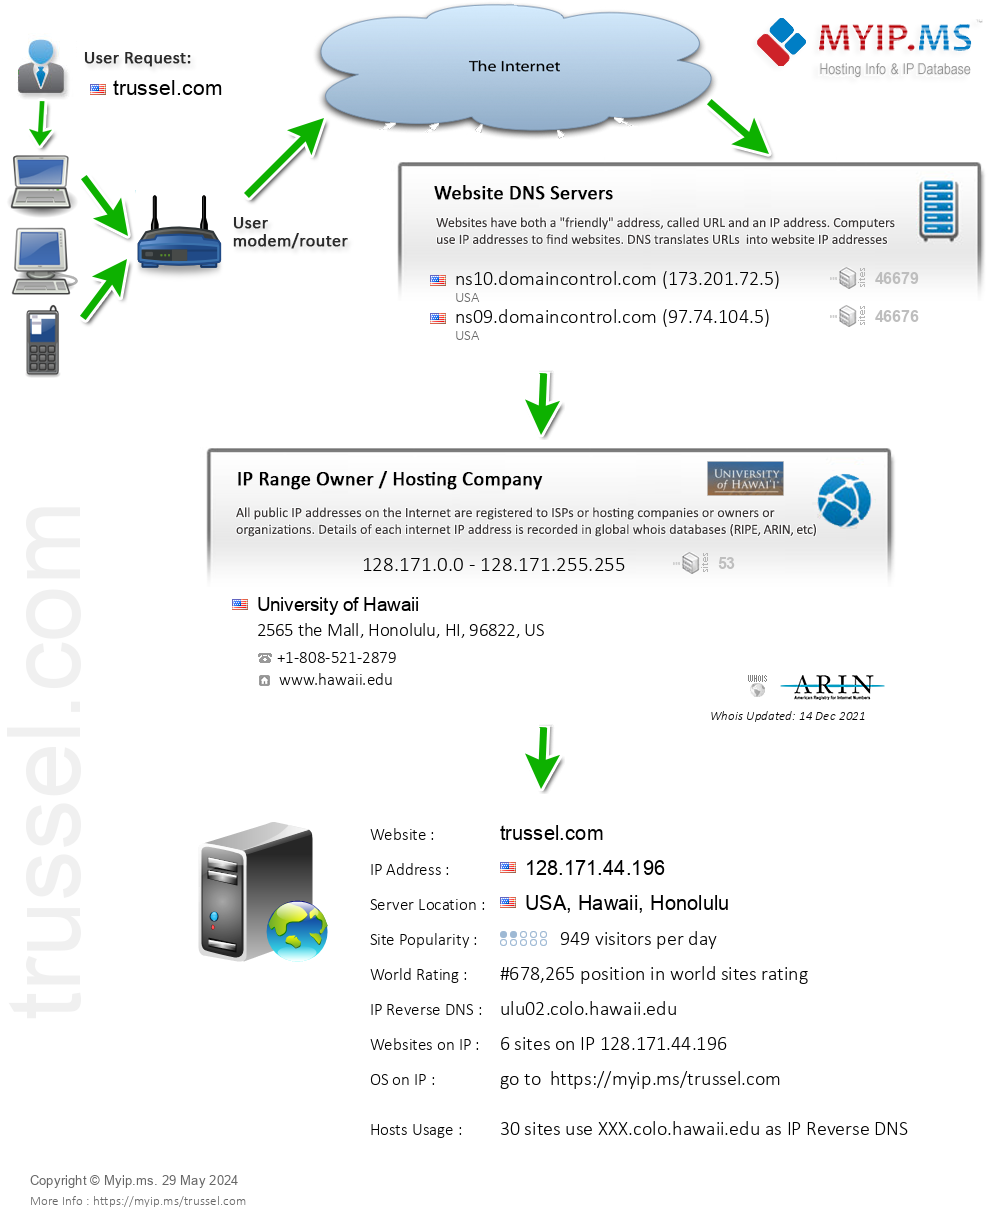 Trussel.com - Website Hosting Visual IP Diagram